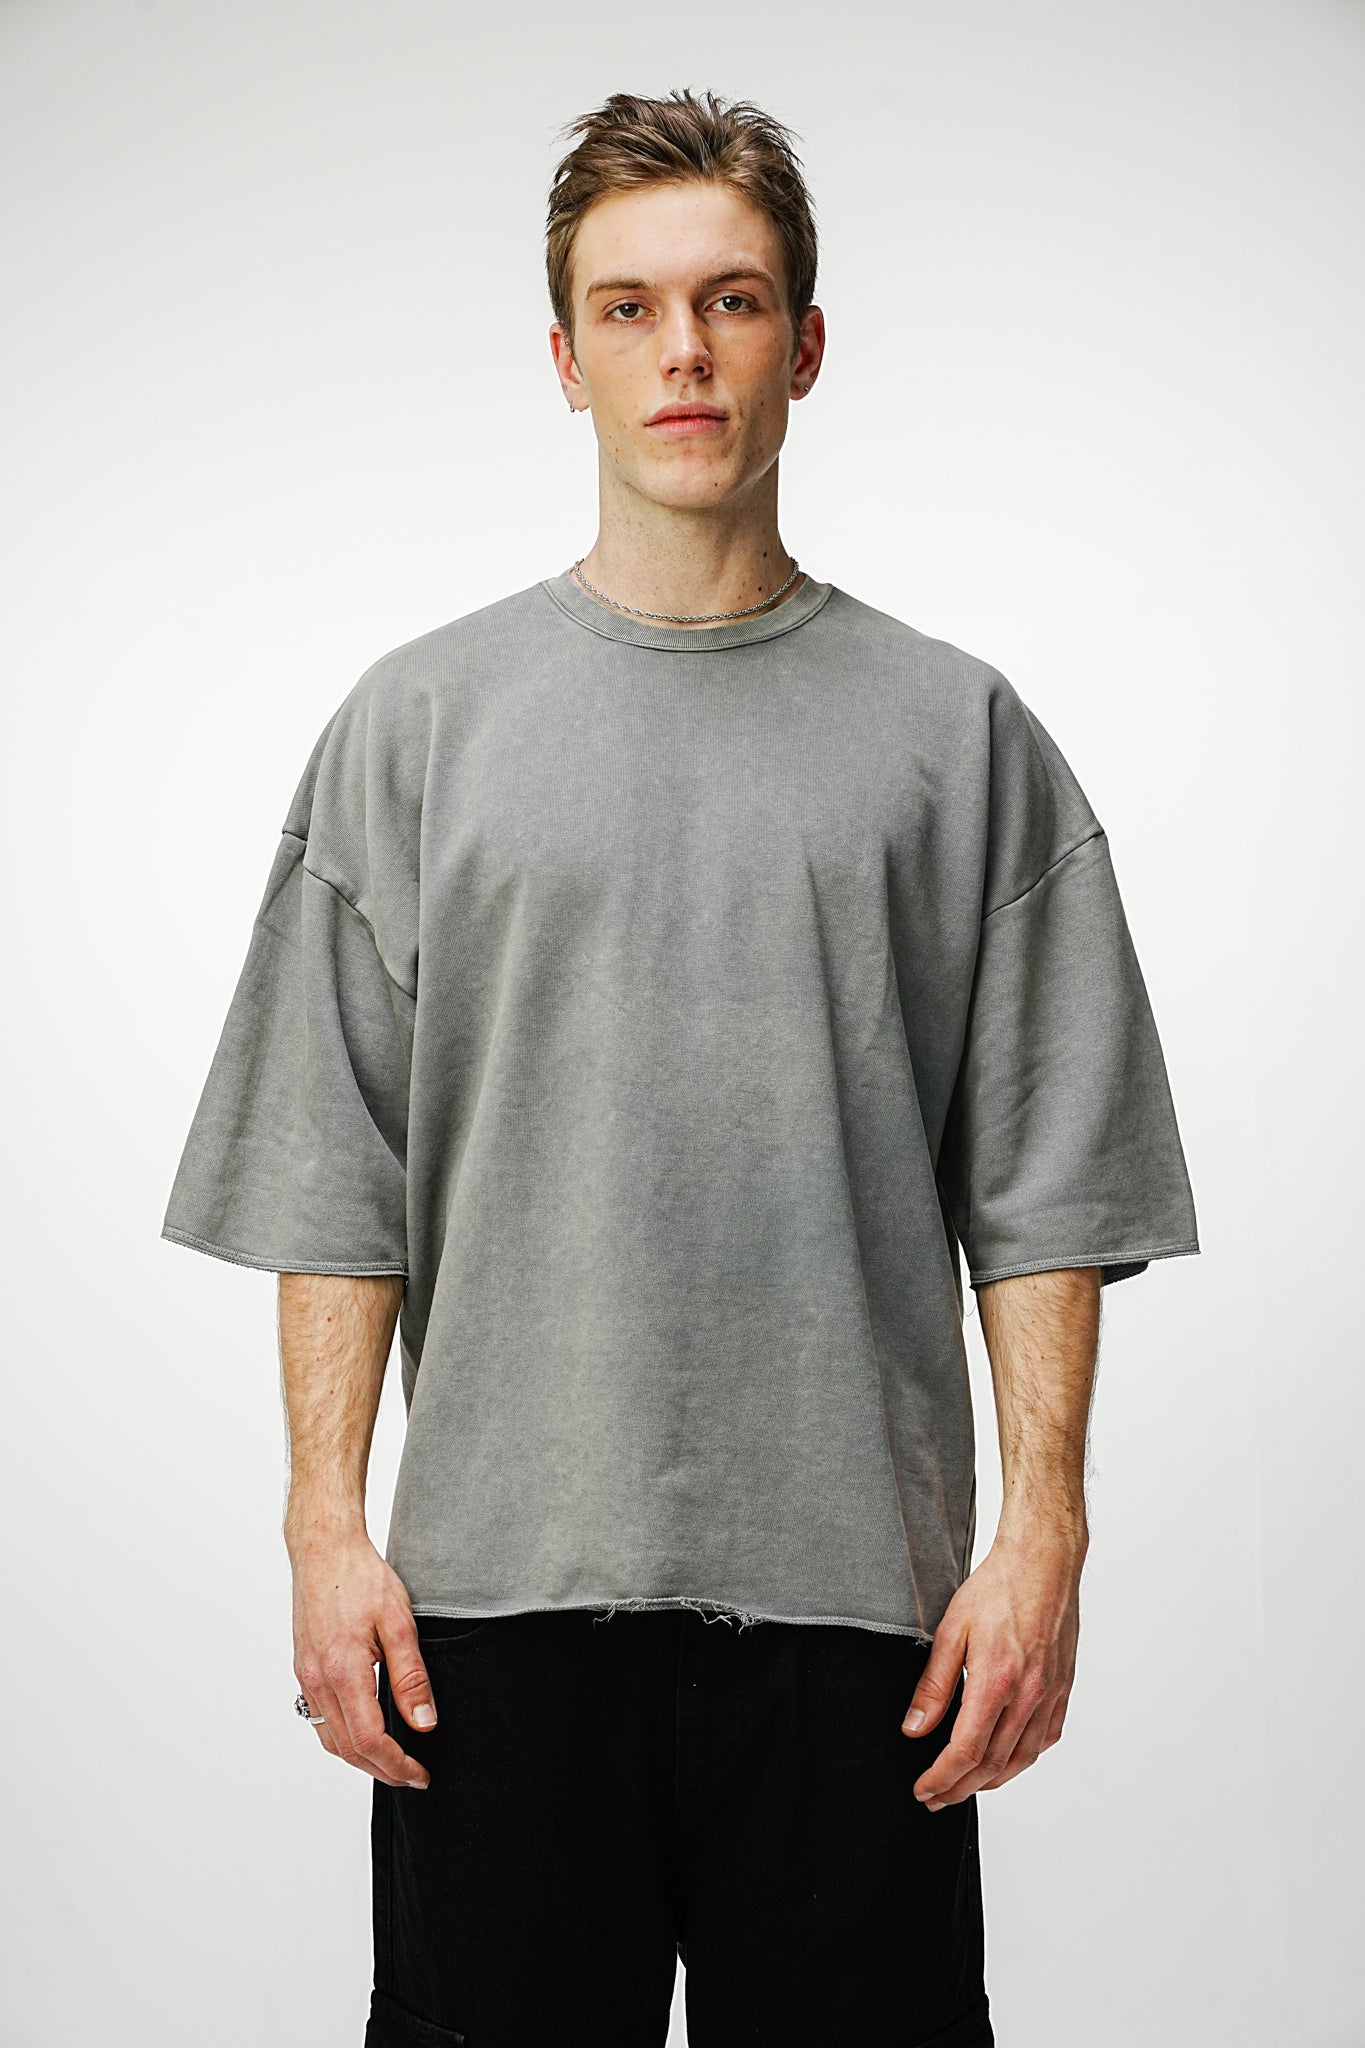 Oversized Tee - Washed Grey - UNEFFECTED STUDIOS® - T-shirt - UNEFFECTED STUDIOS®